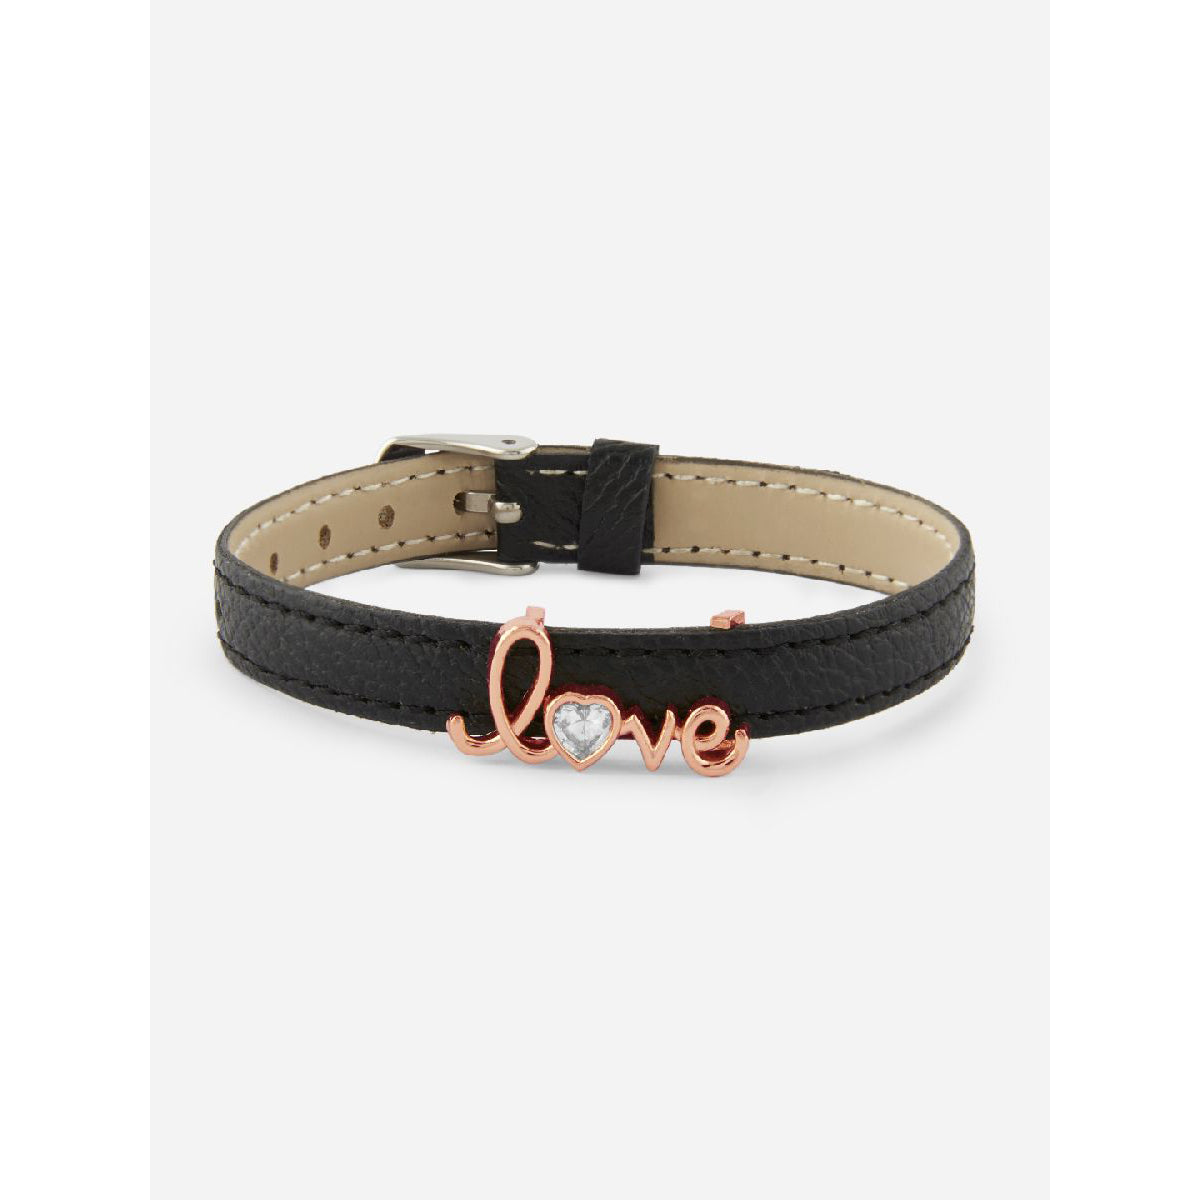 Love Cubic zirconia Leather Copper Black Gold Wrist band Bracelet